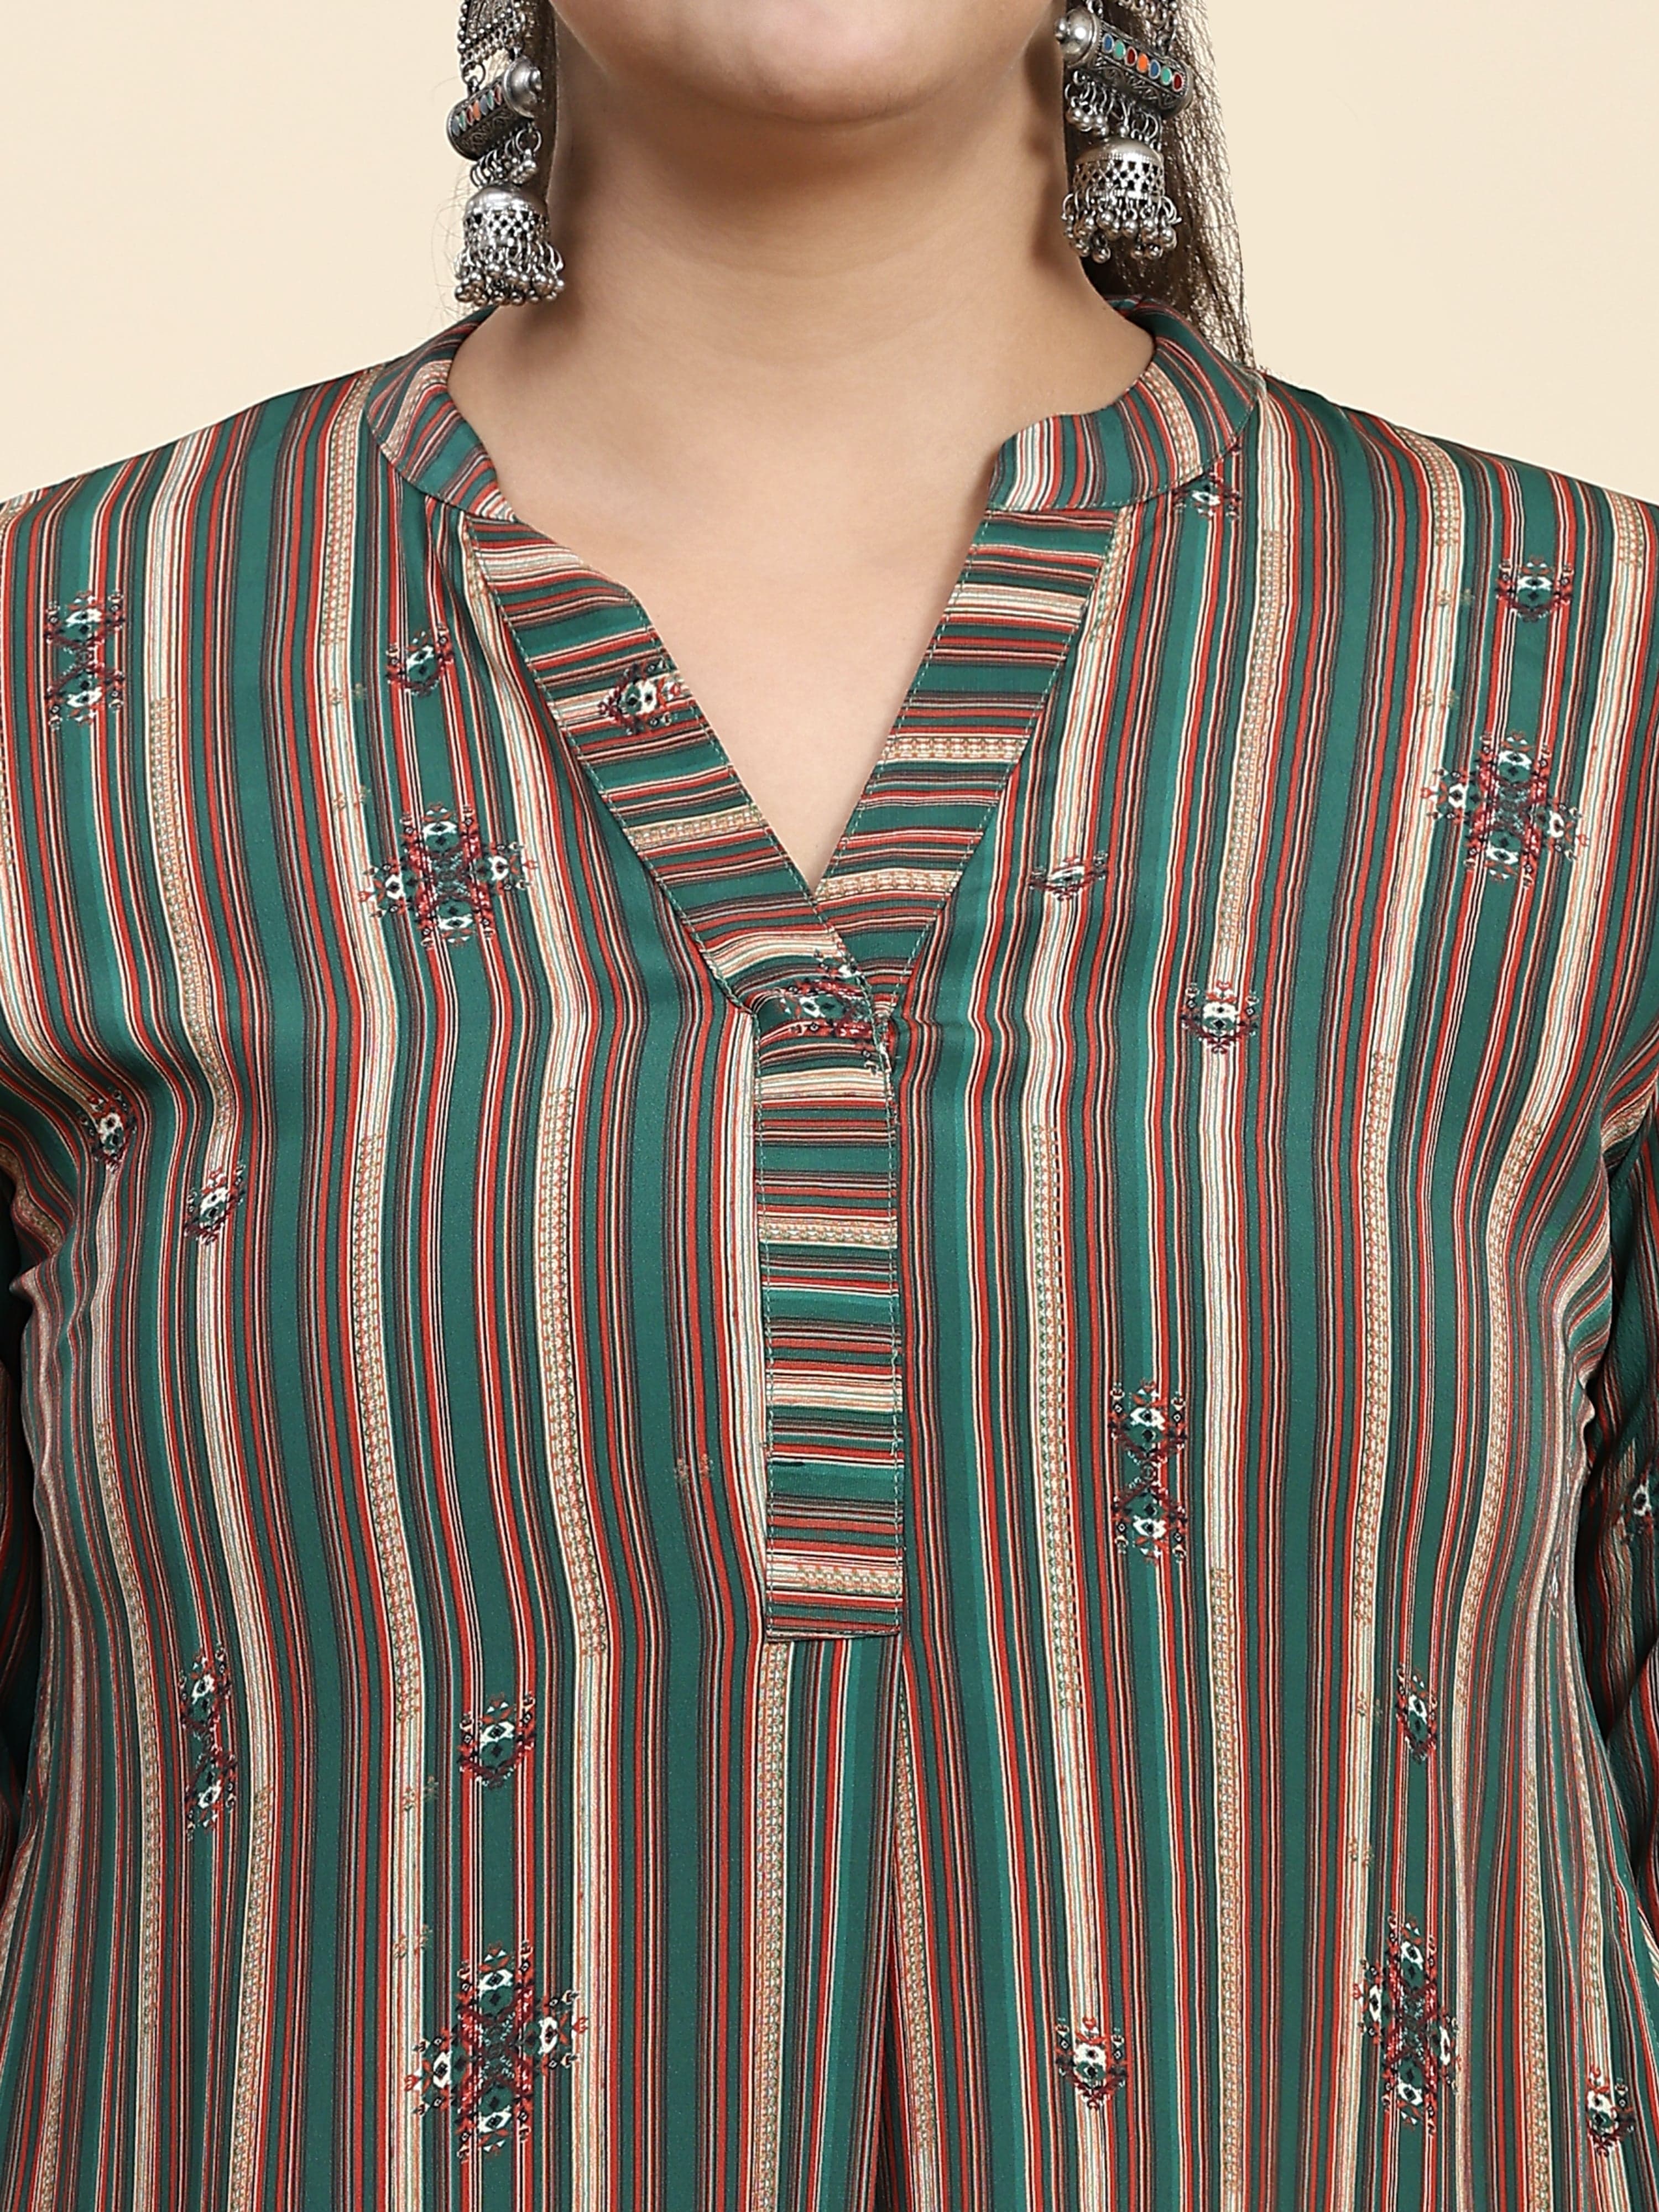 Olive Liner Stripes coord Set - Jeeaayanu Fashion